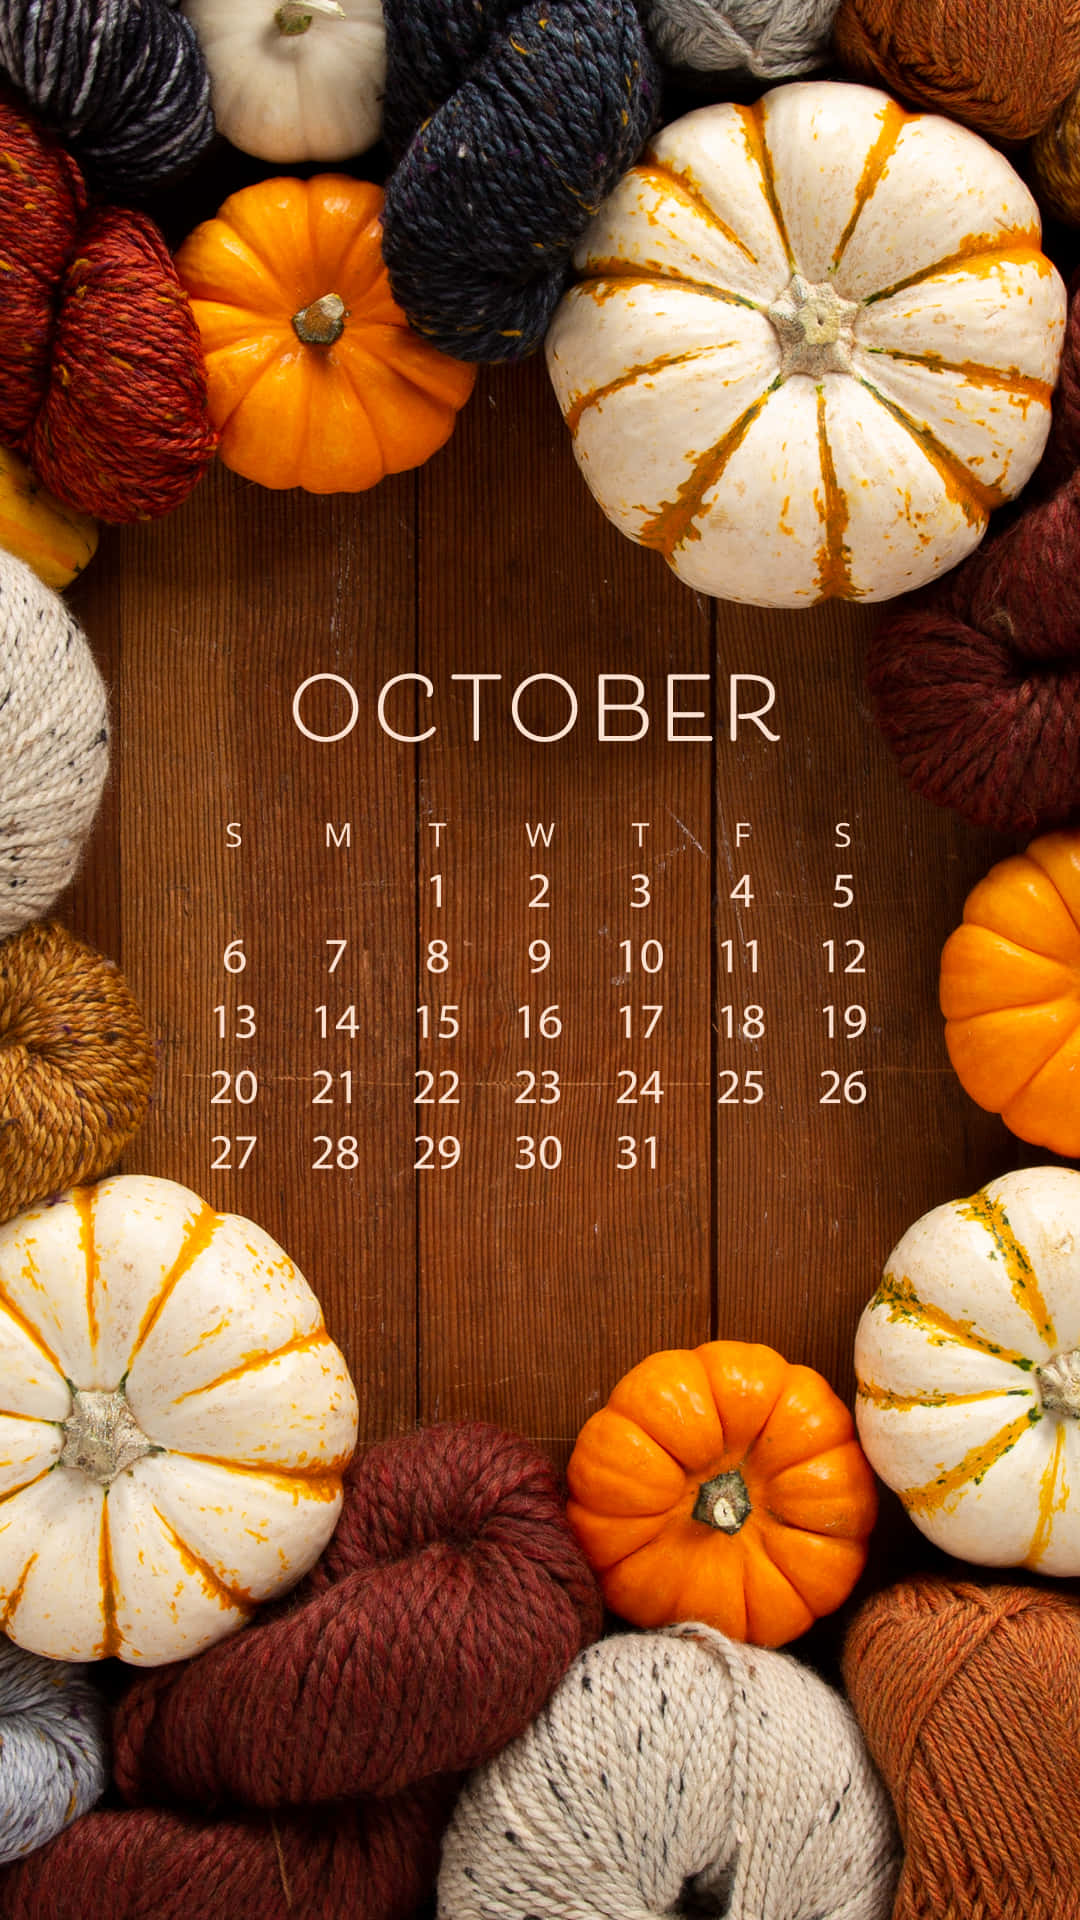 A Calendar With Pumpkins And Yarn Wallpaper